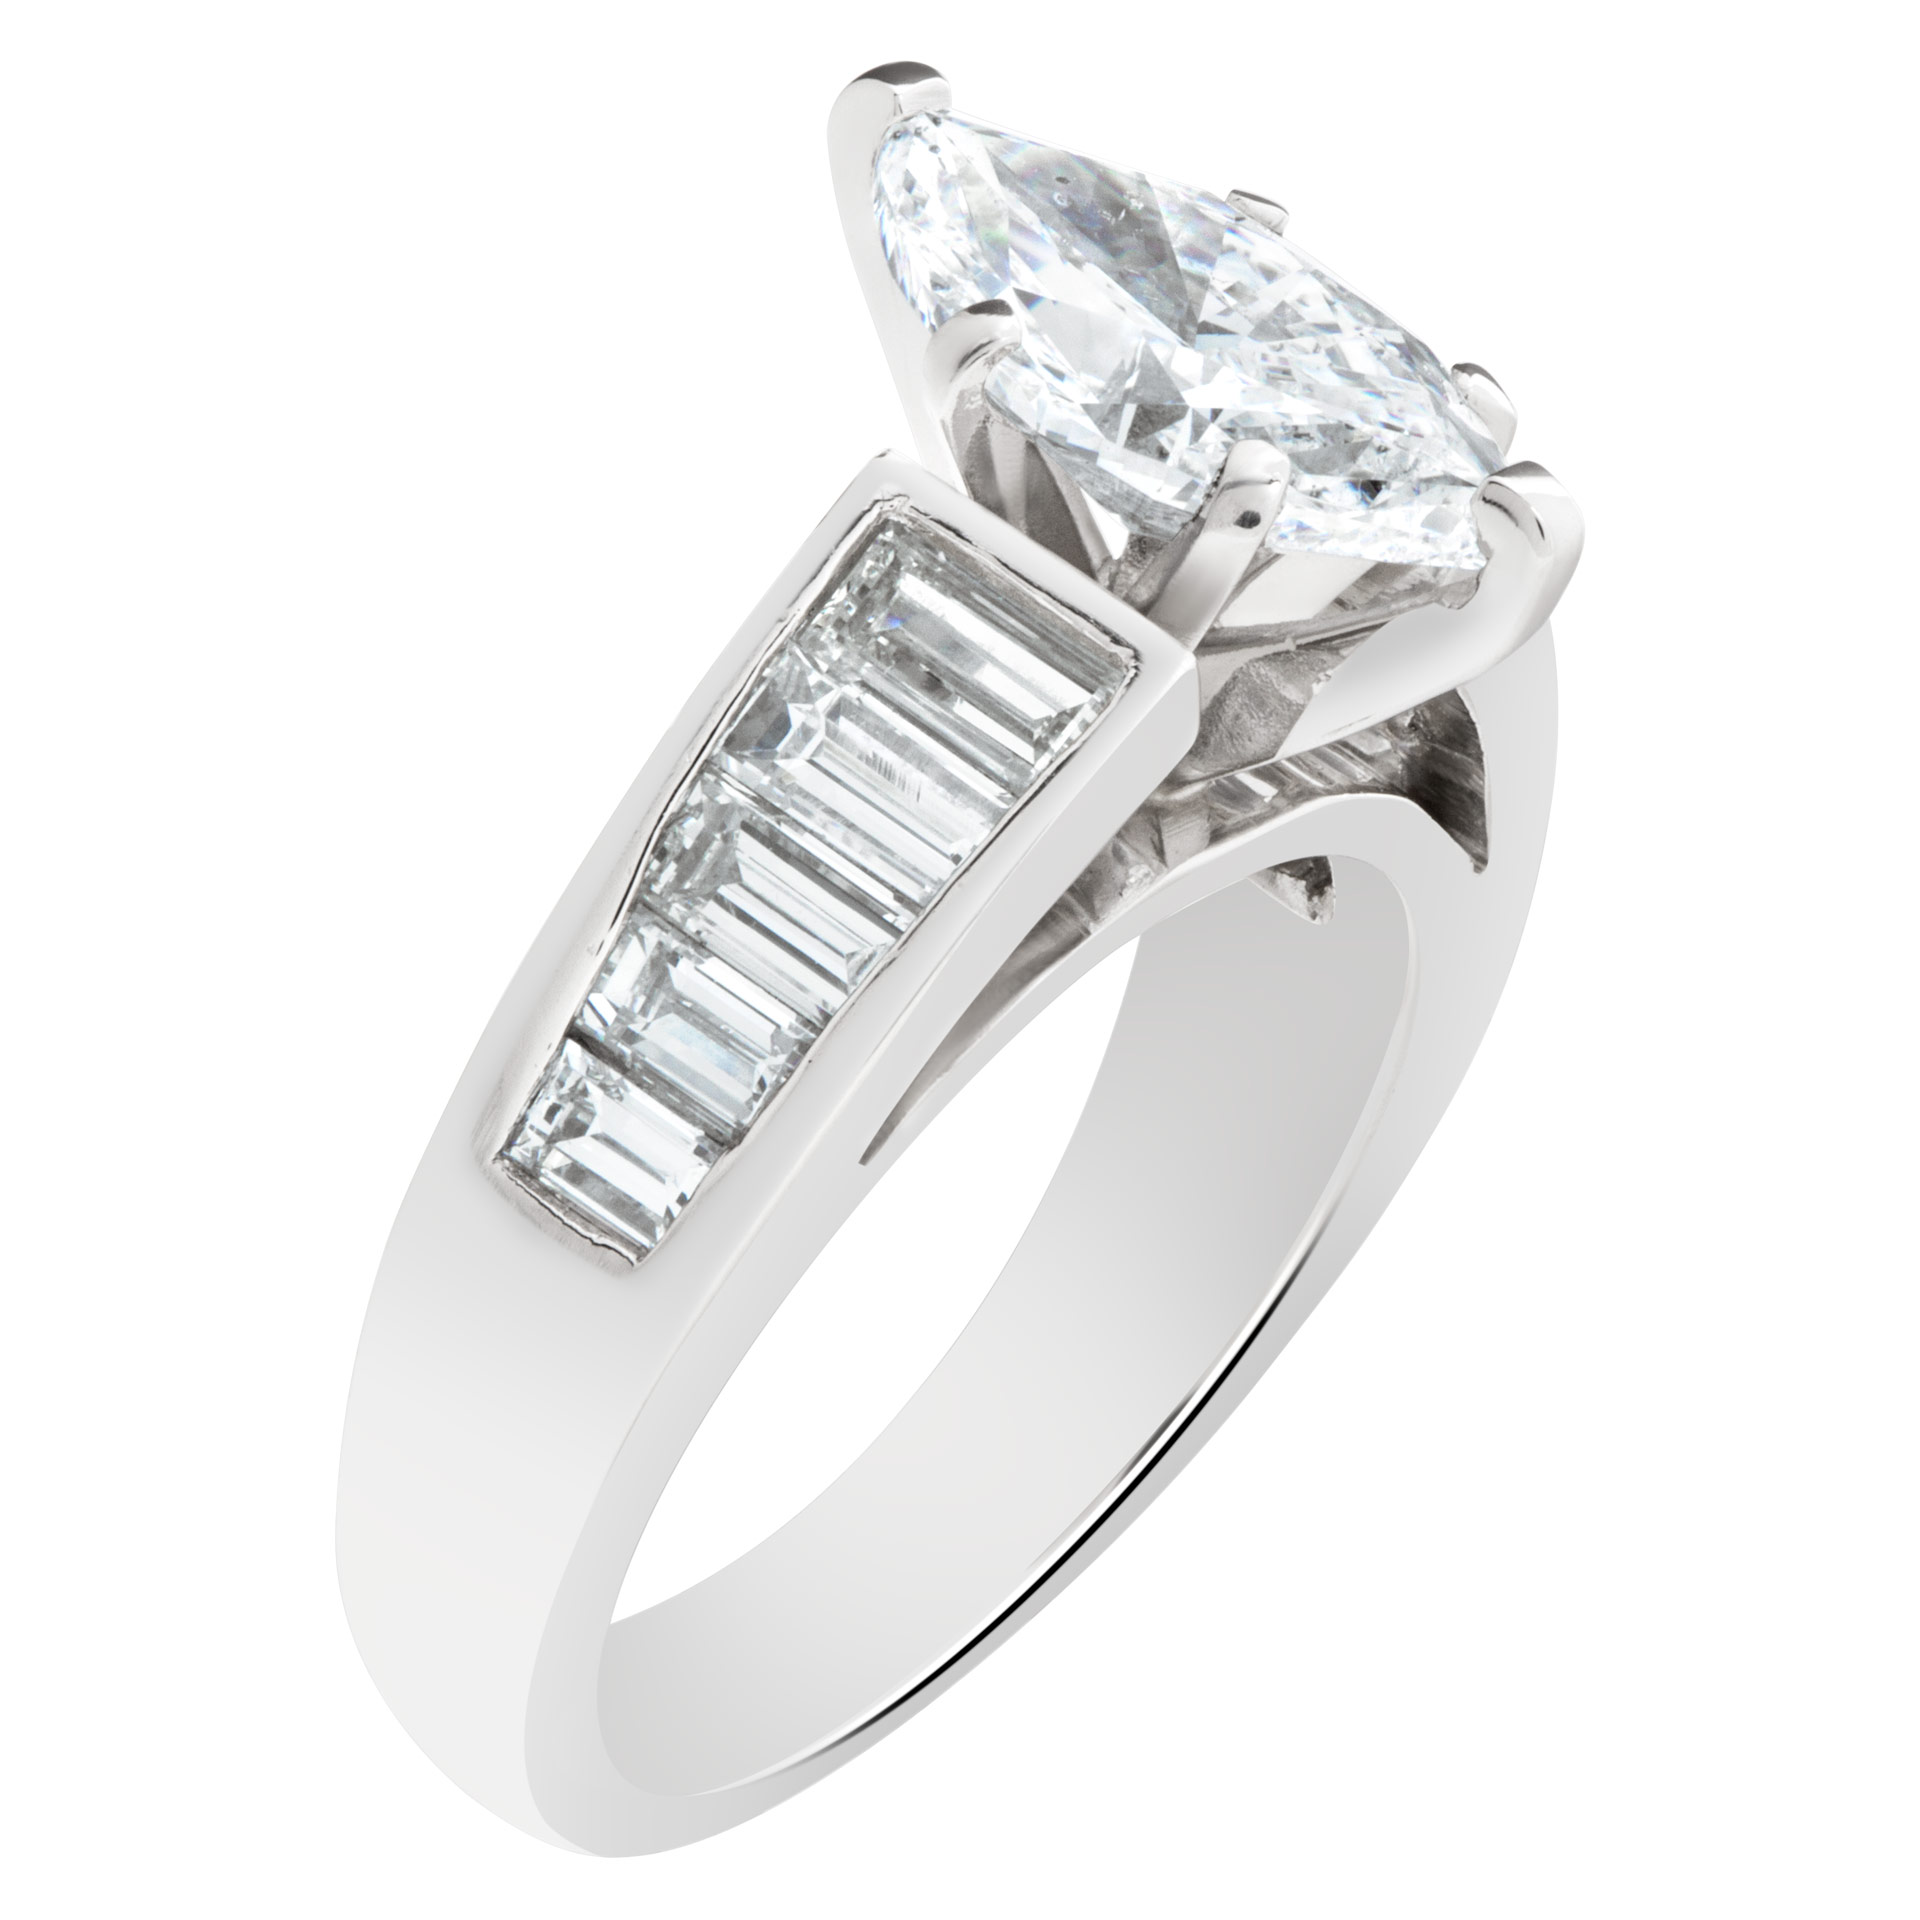 GIA certified marquise brilliant cut diamond 1.53 carat (D color, SI1 clarity) set in platinum setting image 4